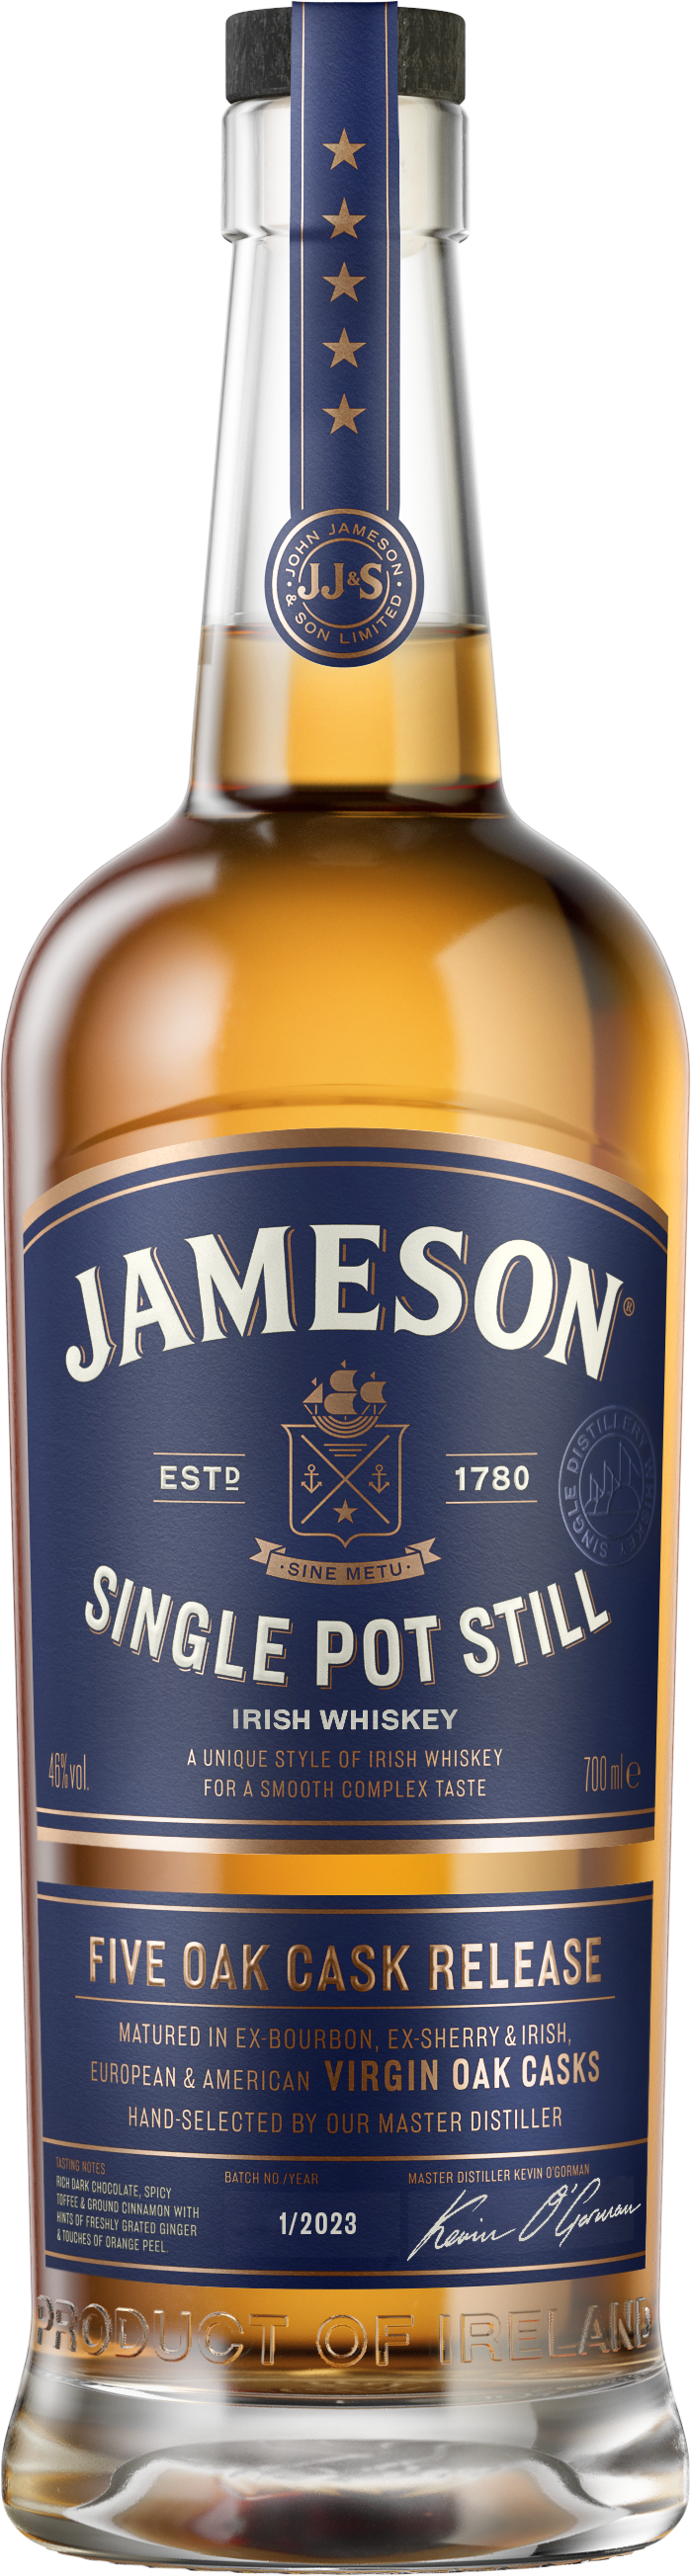 Jameson Single Pot Still Bottle